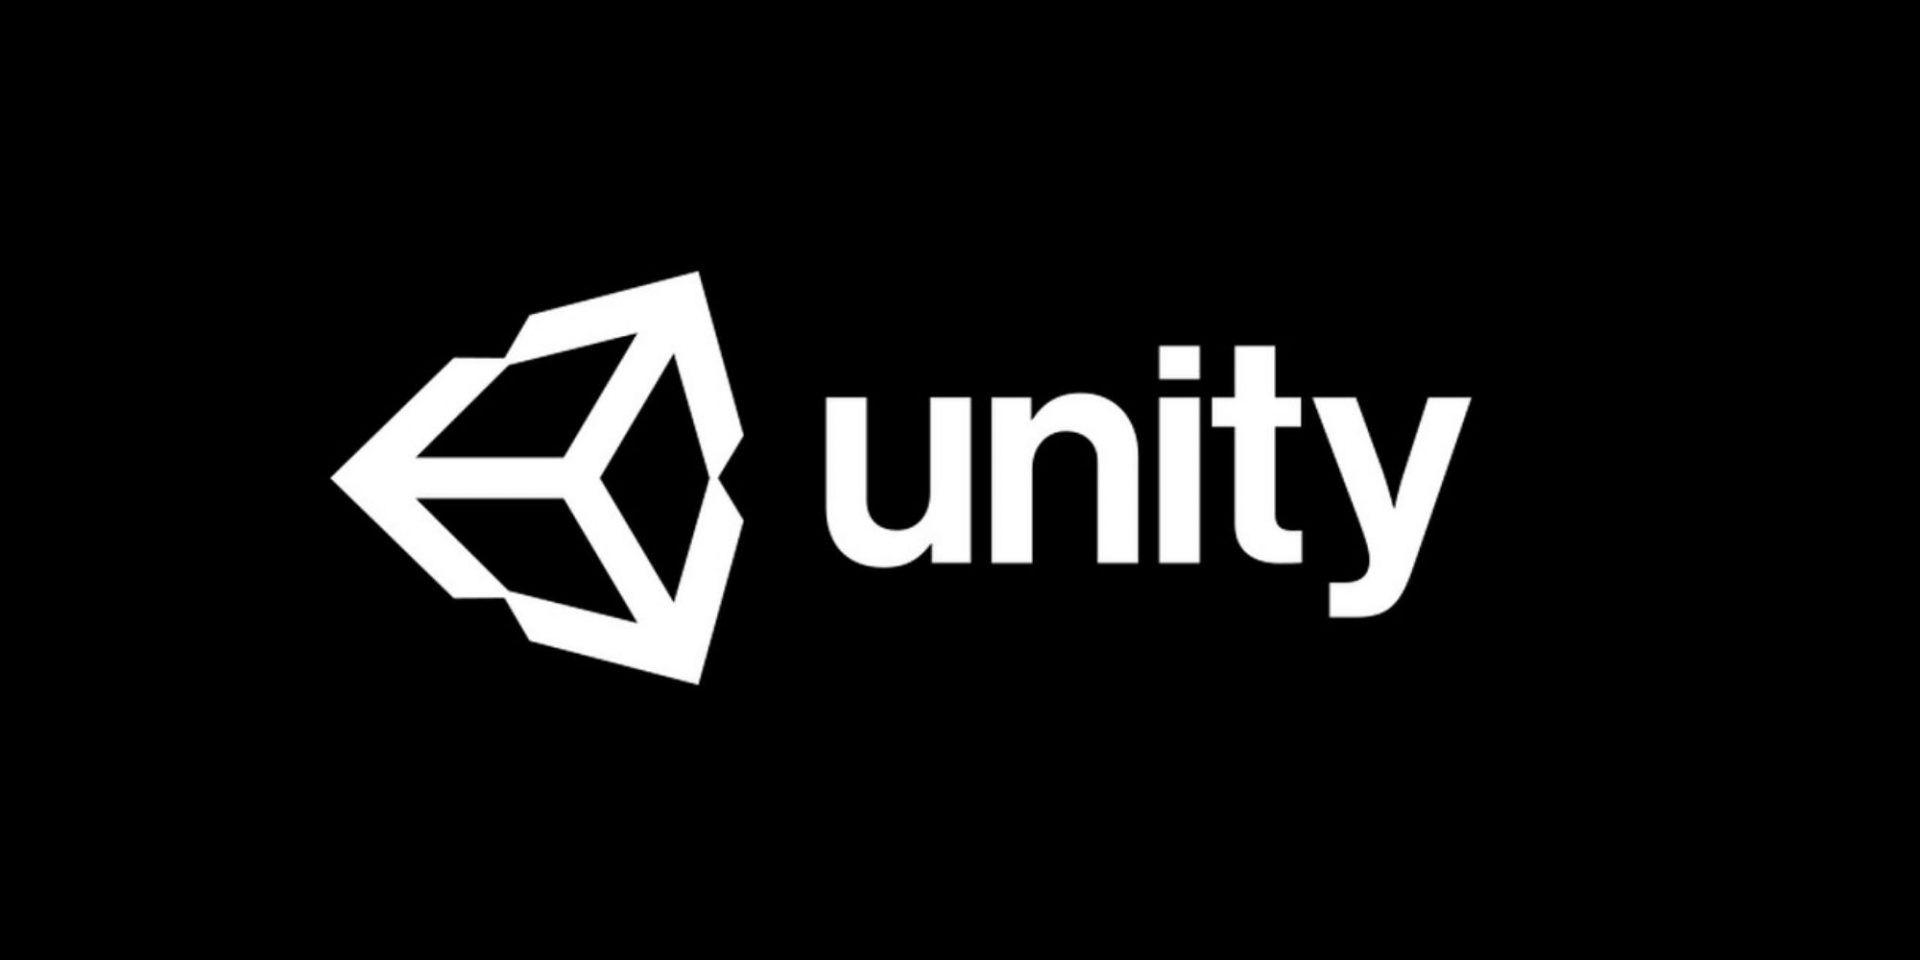 The Unity logo